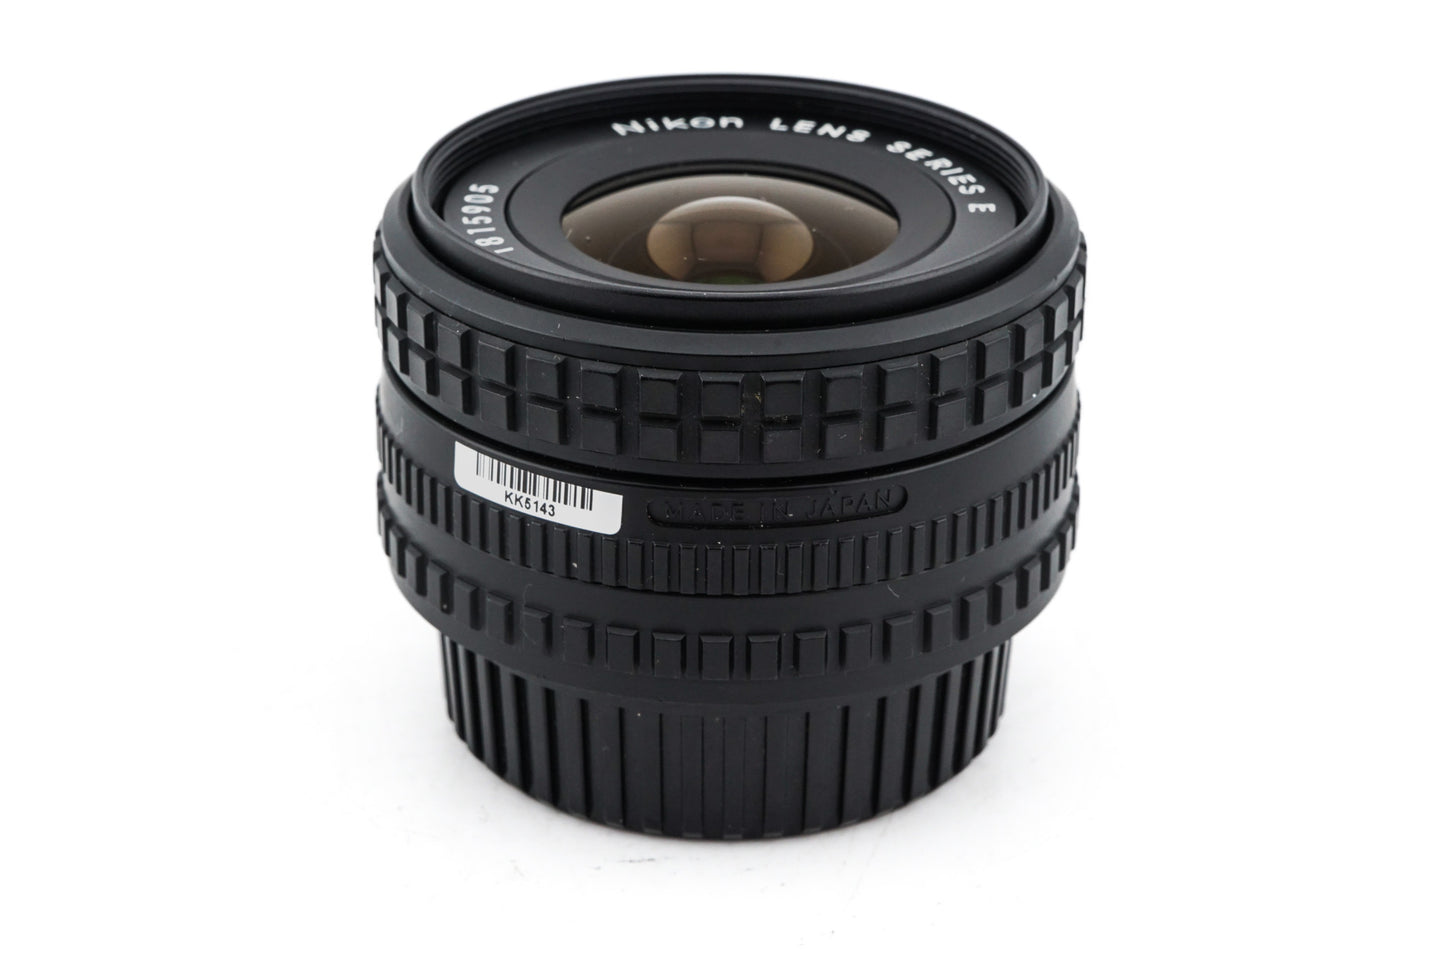 Nikon 28mm f2.8 Series E